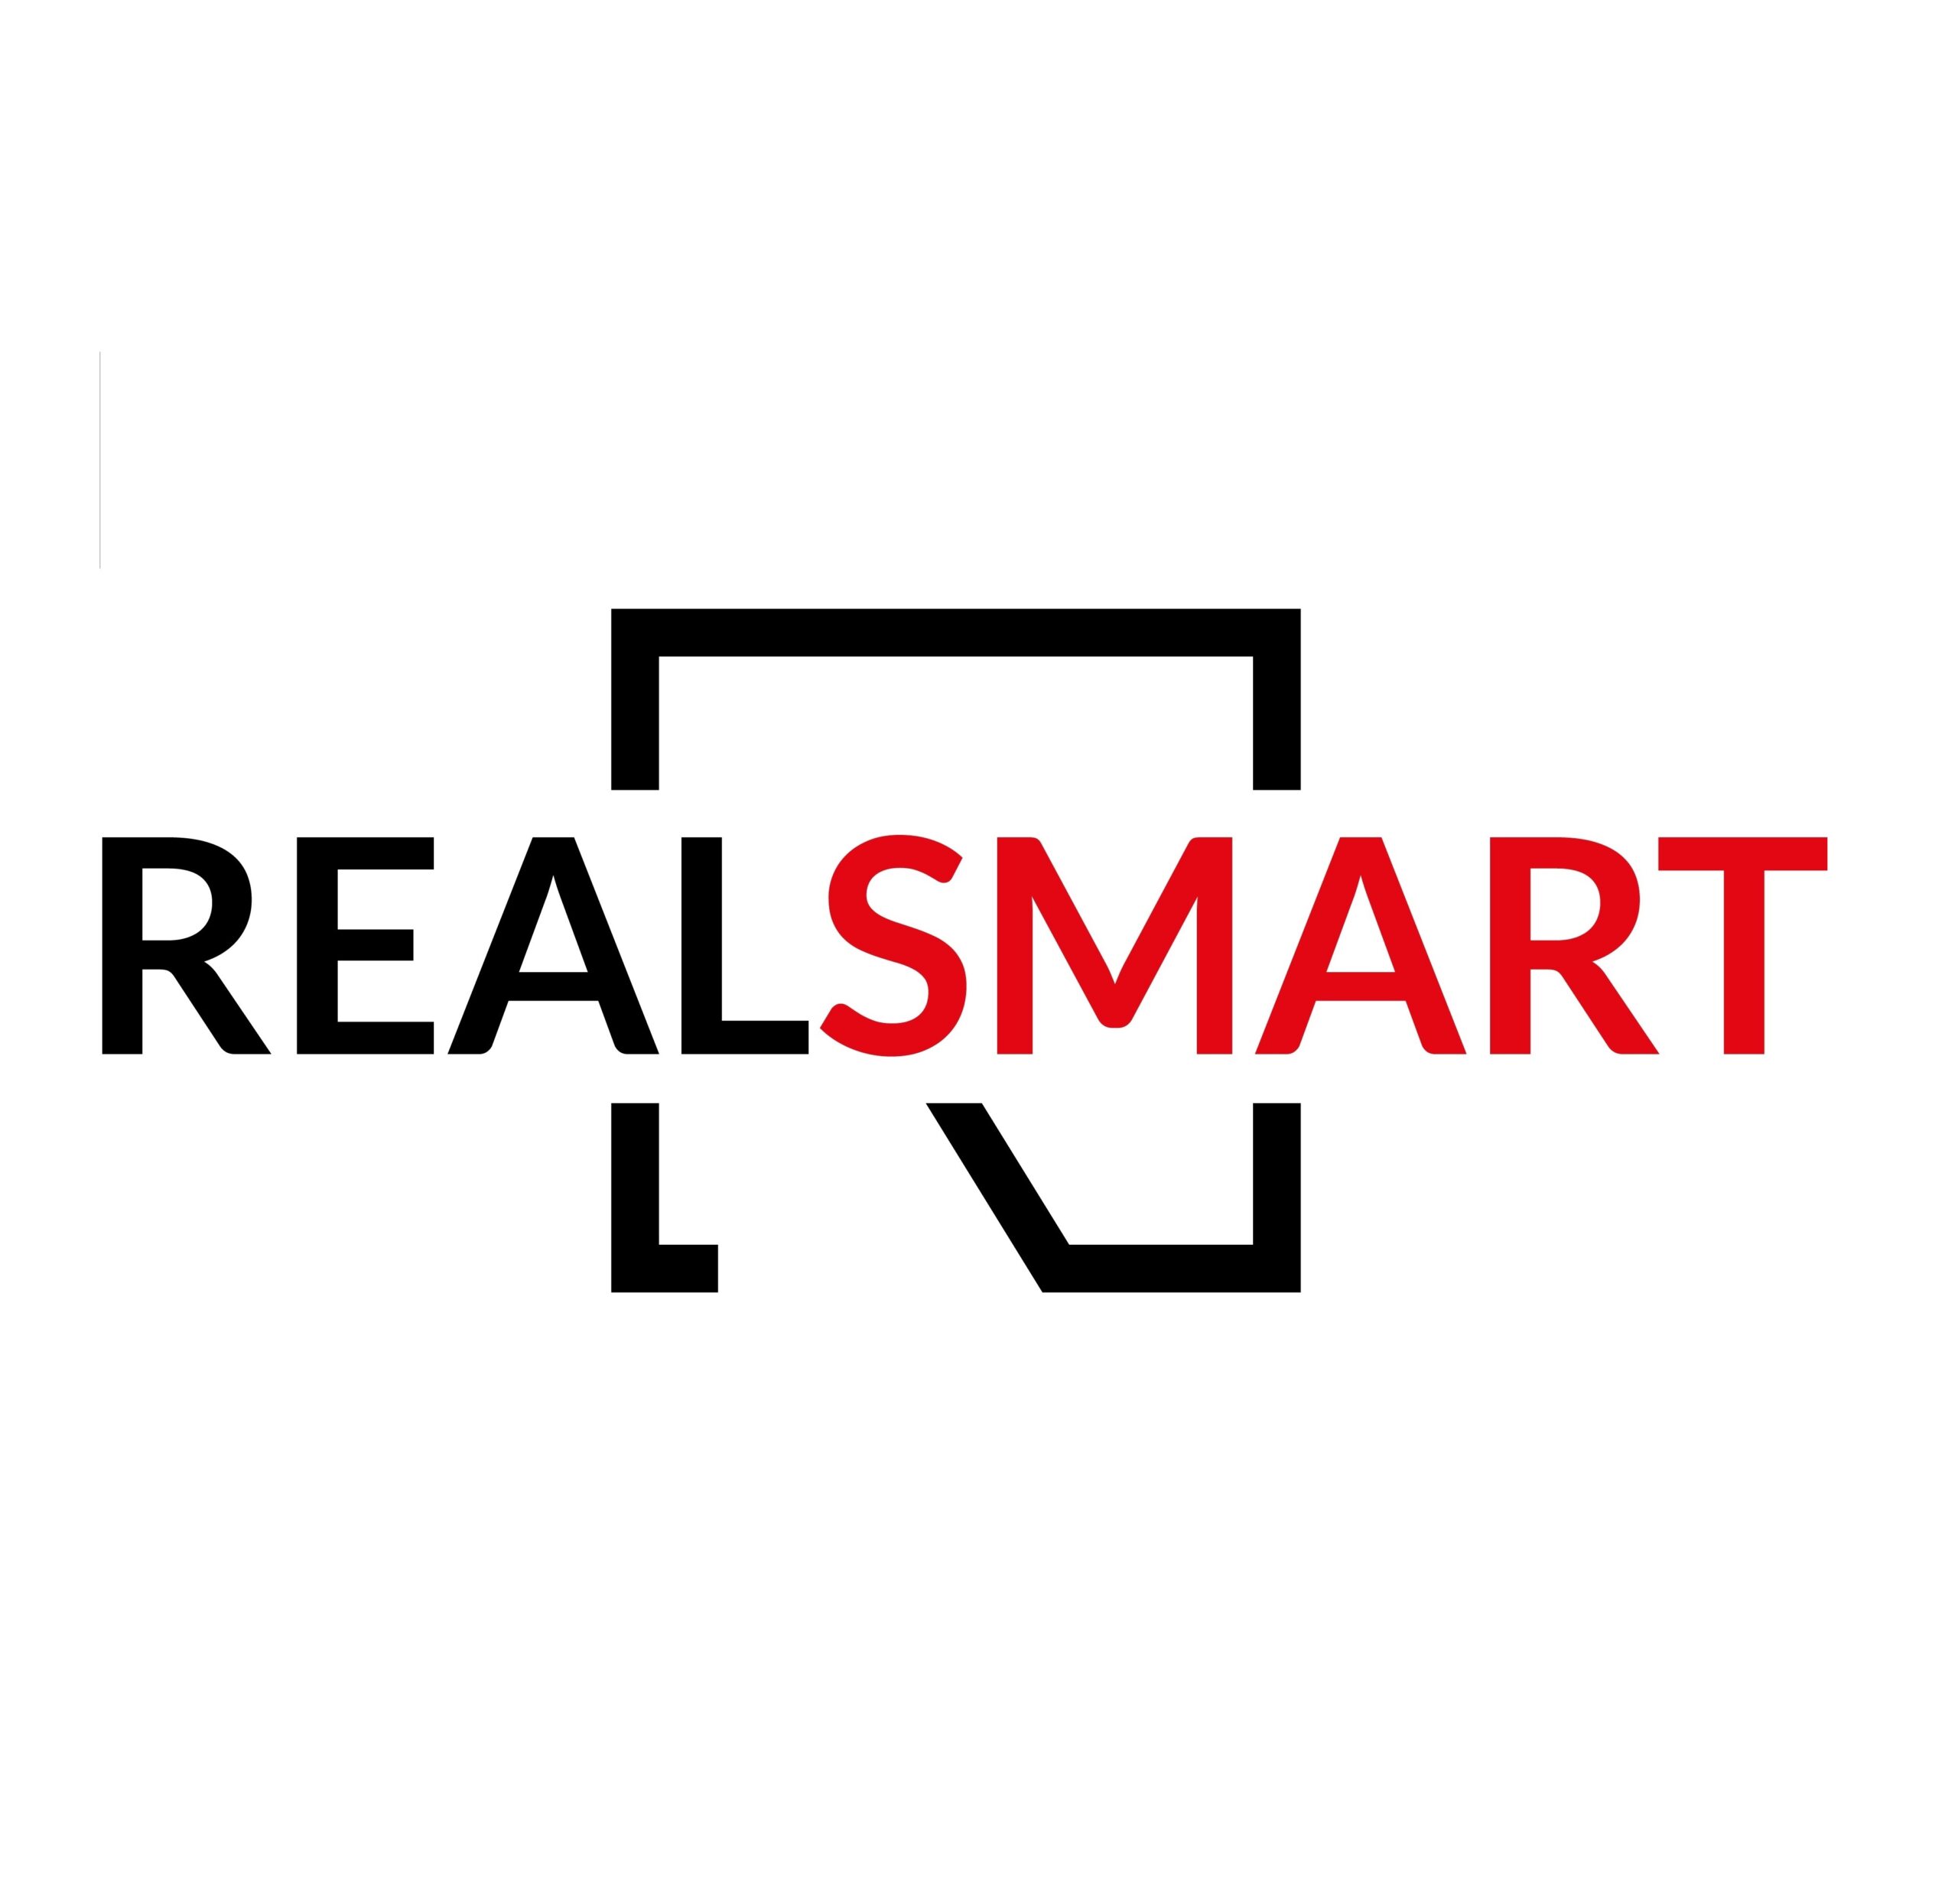 Real Smart logo